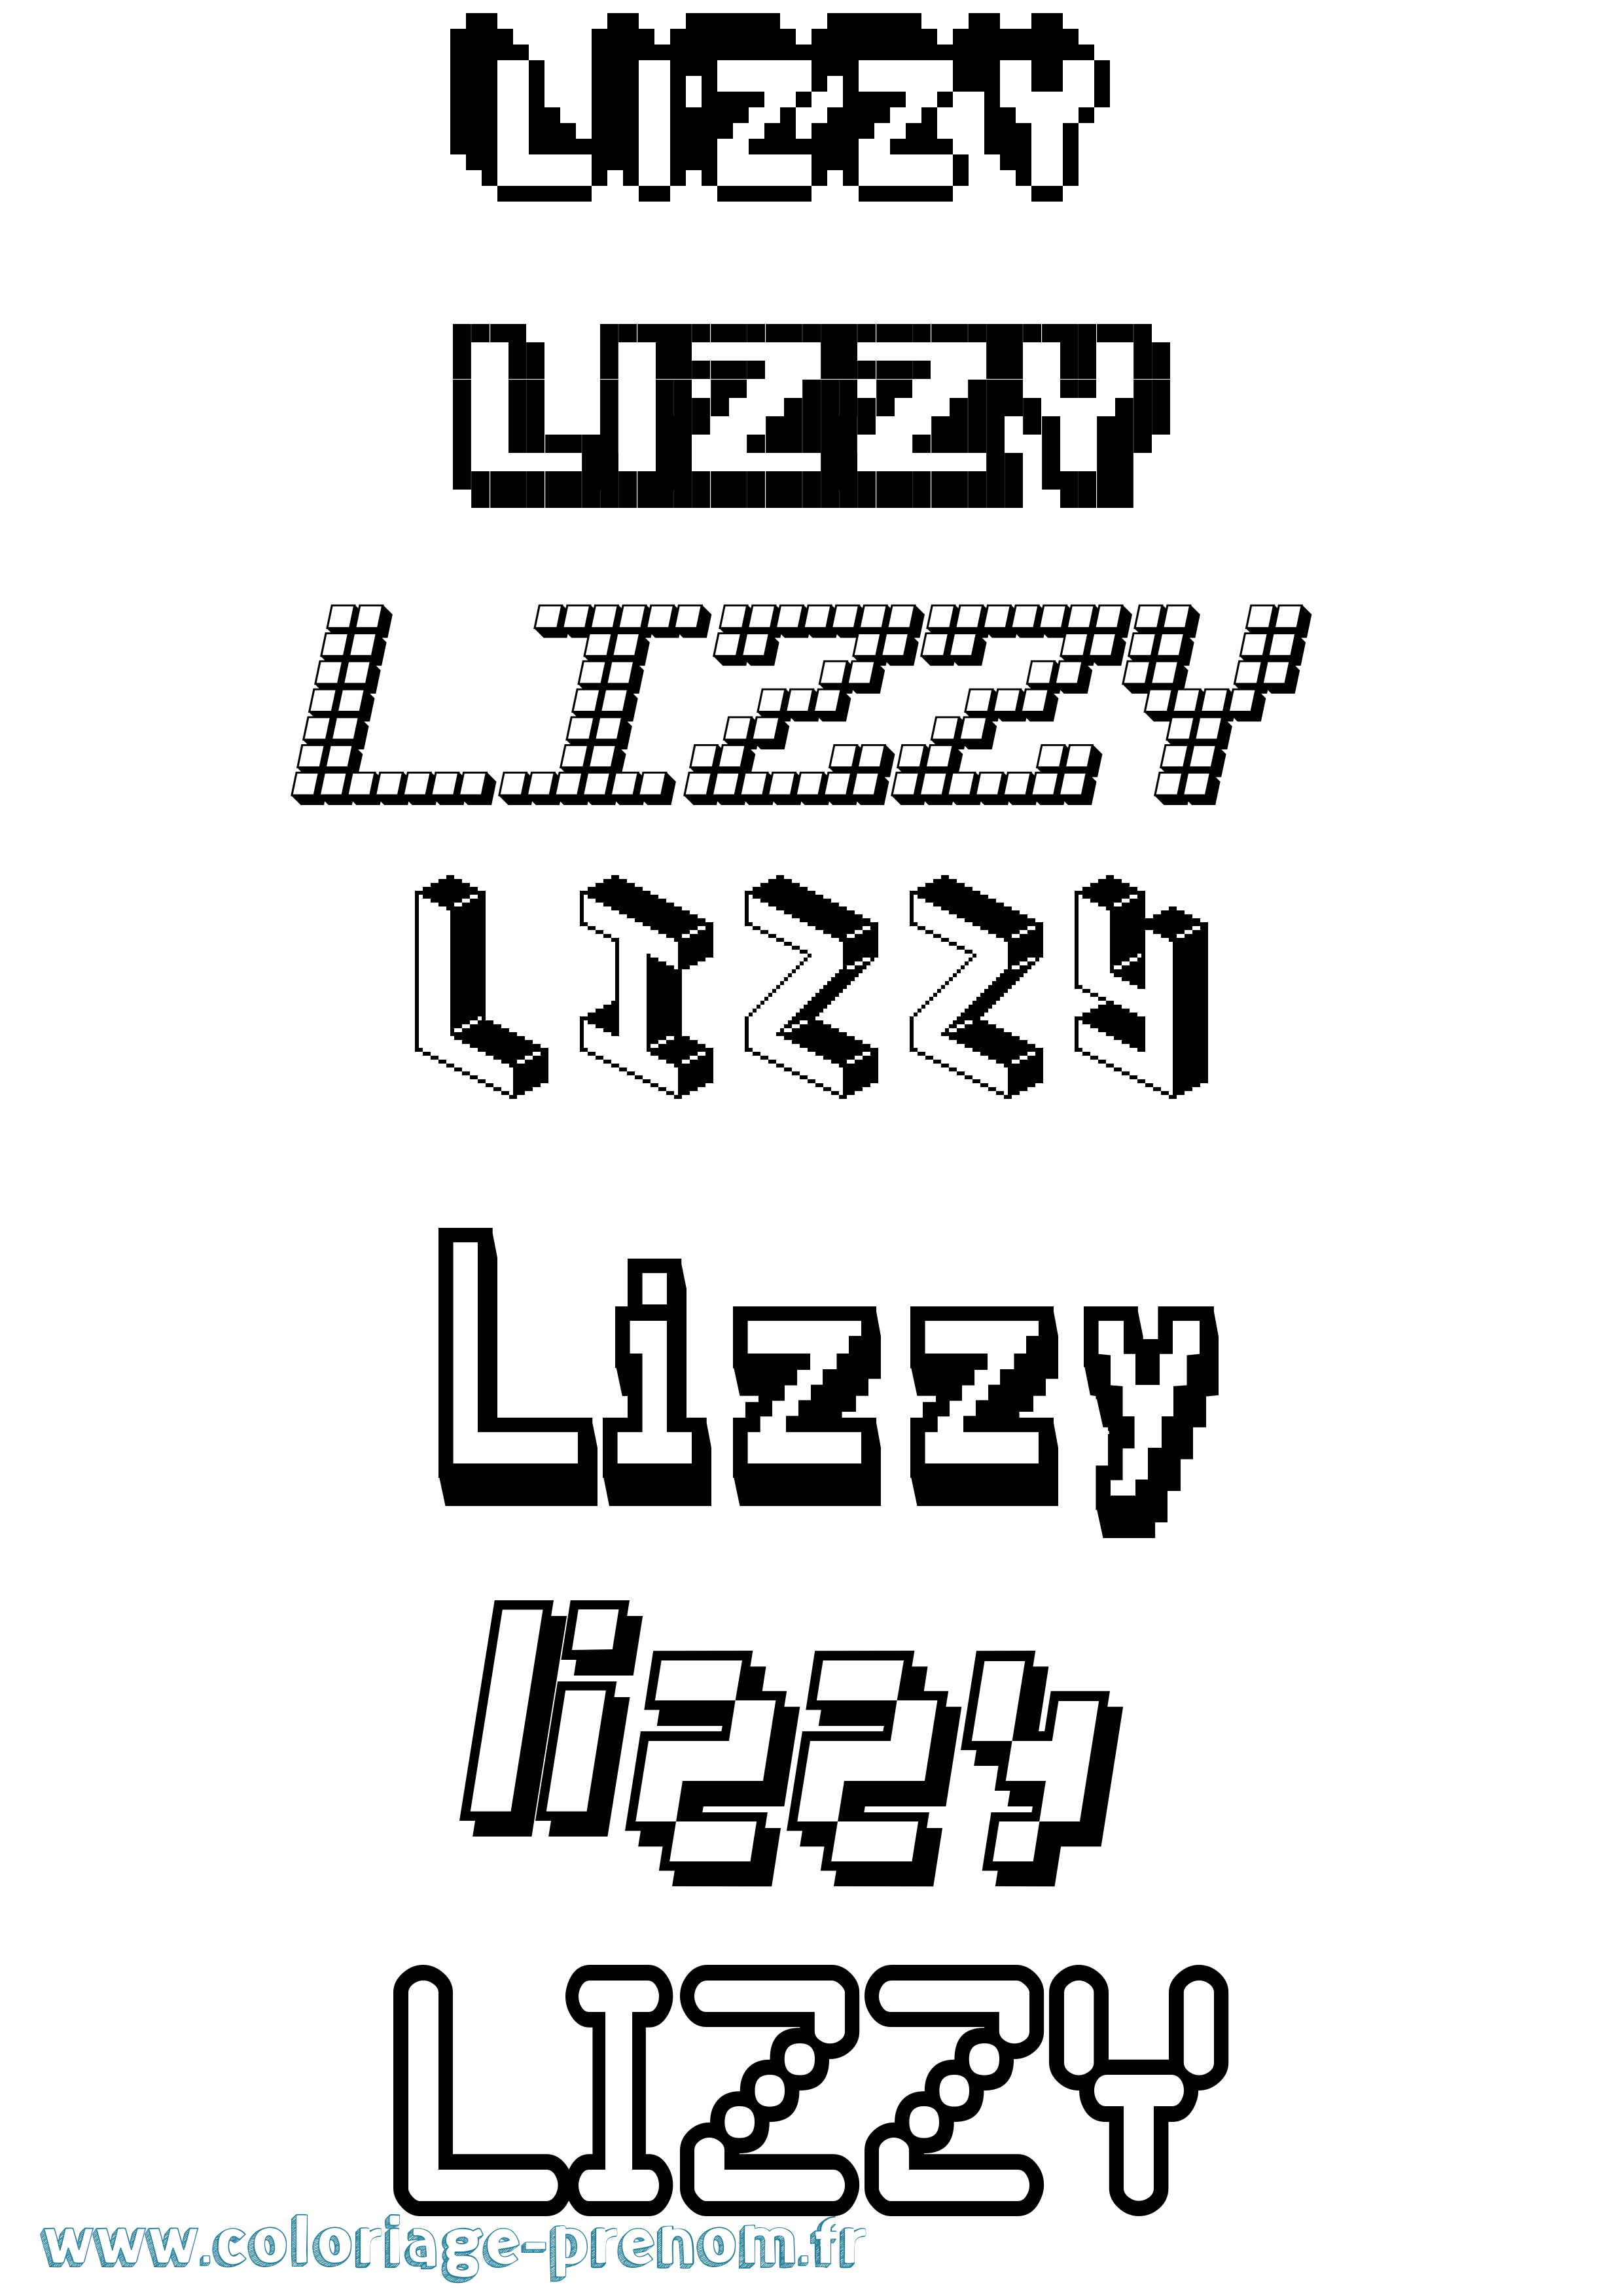 Coloriage prénom Lizzy Pixel